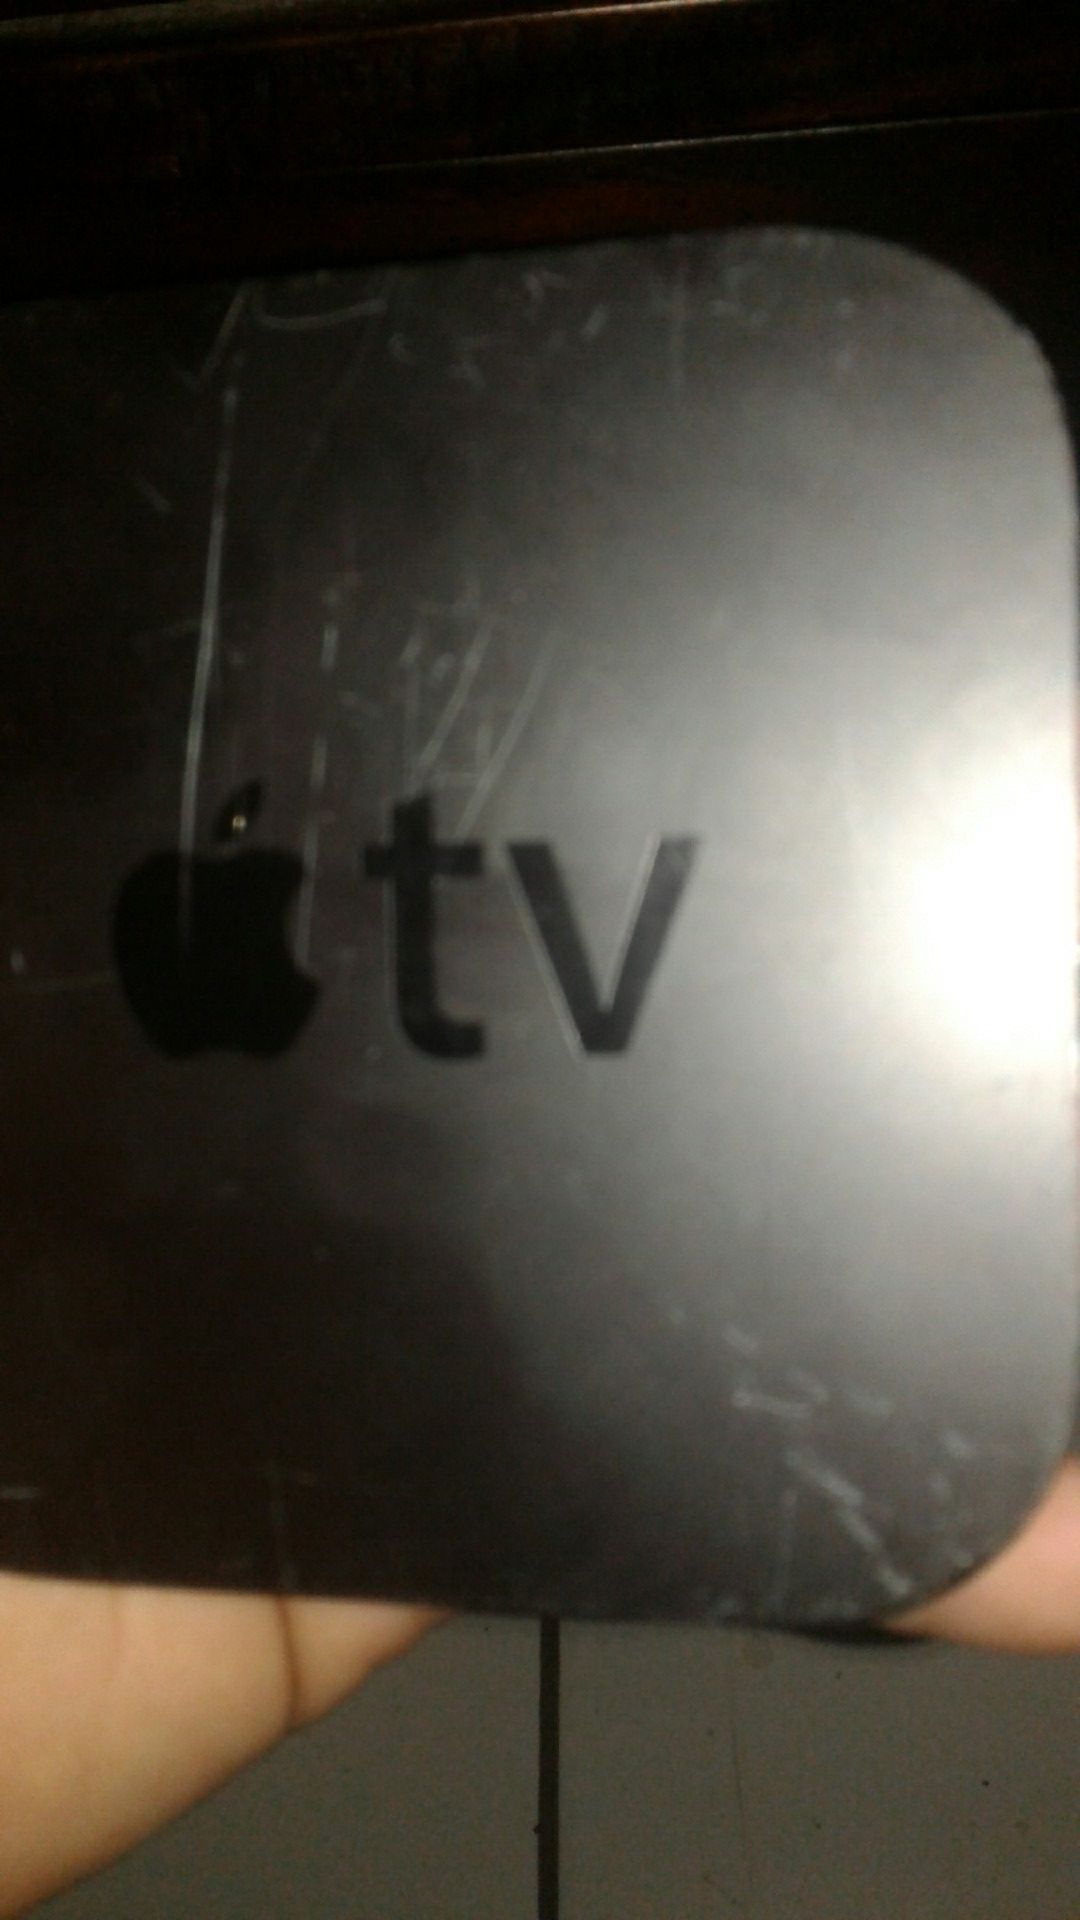 Apple tv